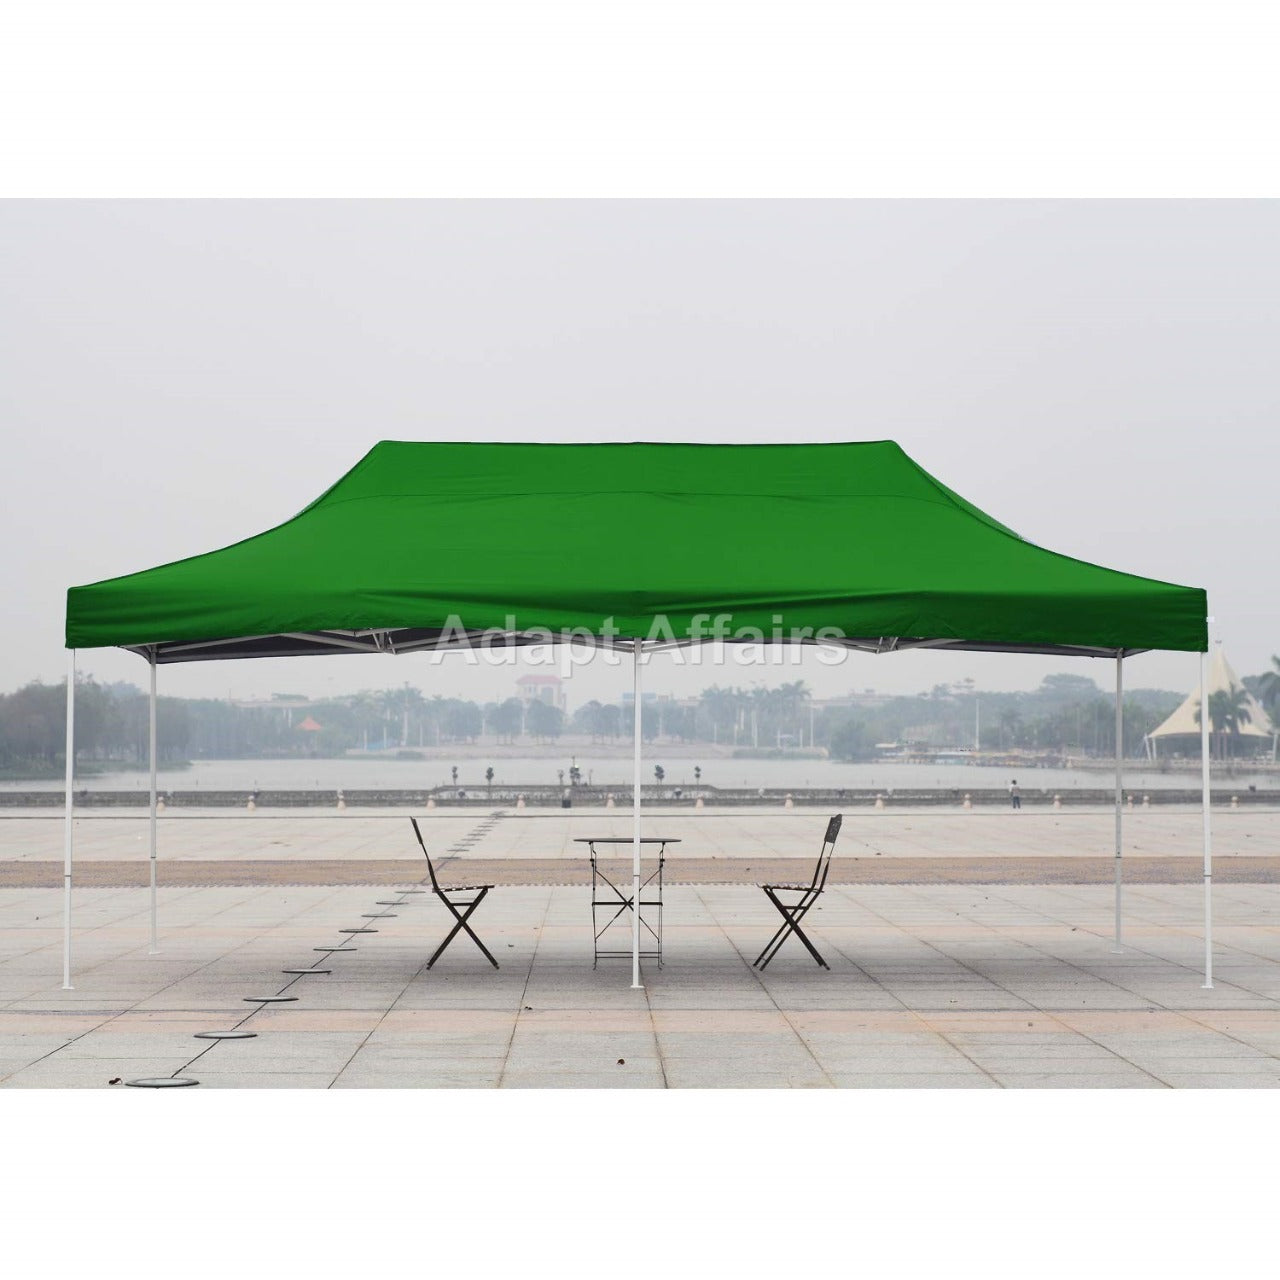 Canopy Tent - 10 x 20 Feet Regular Quality